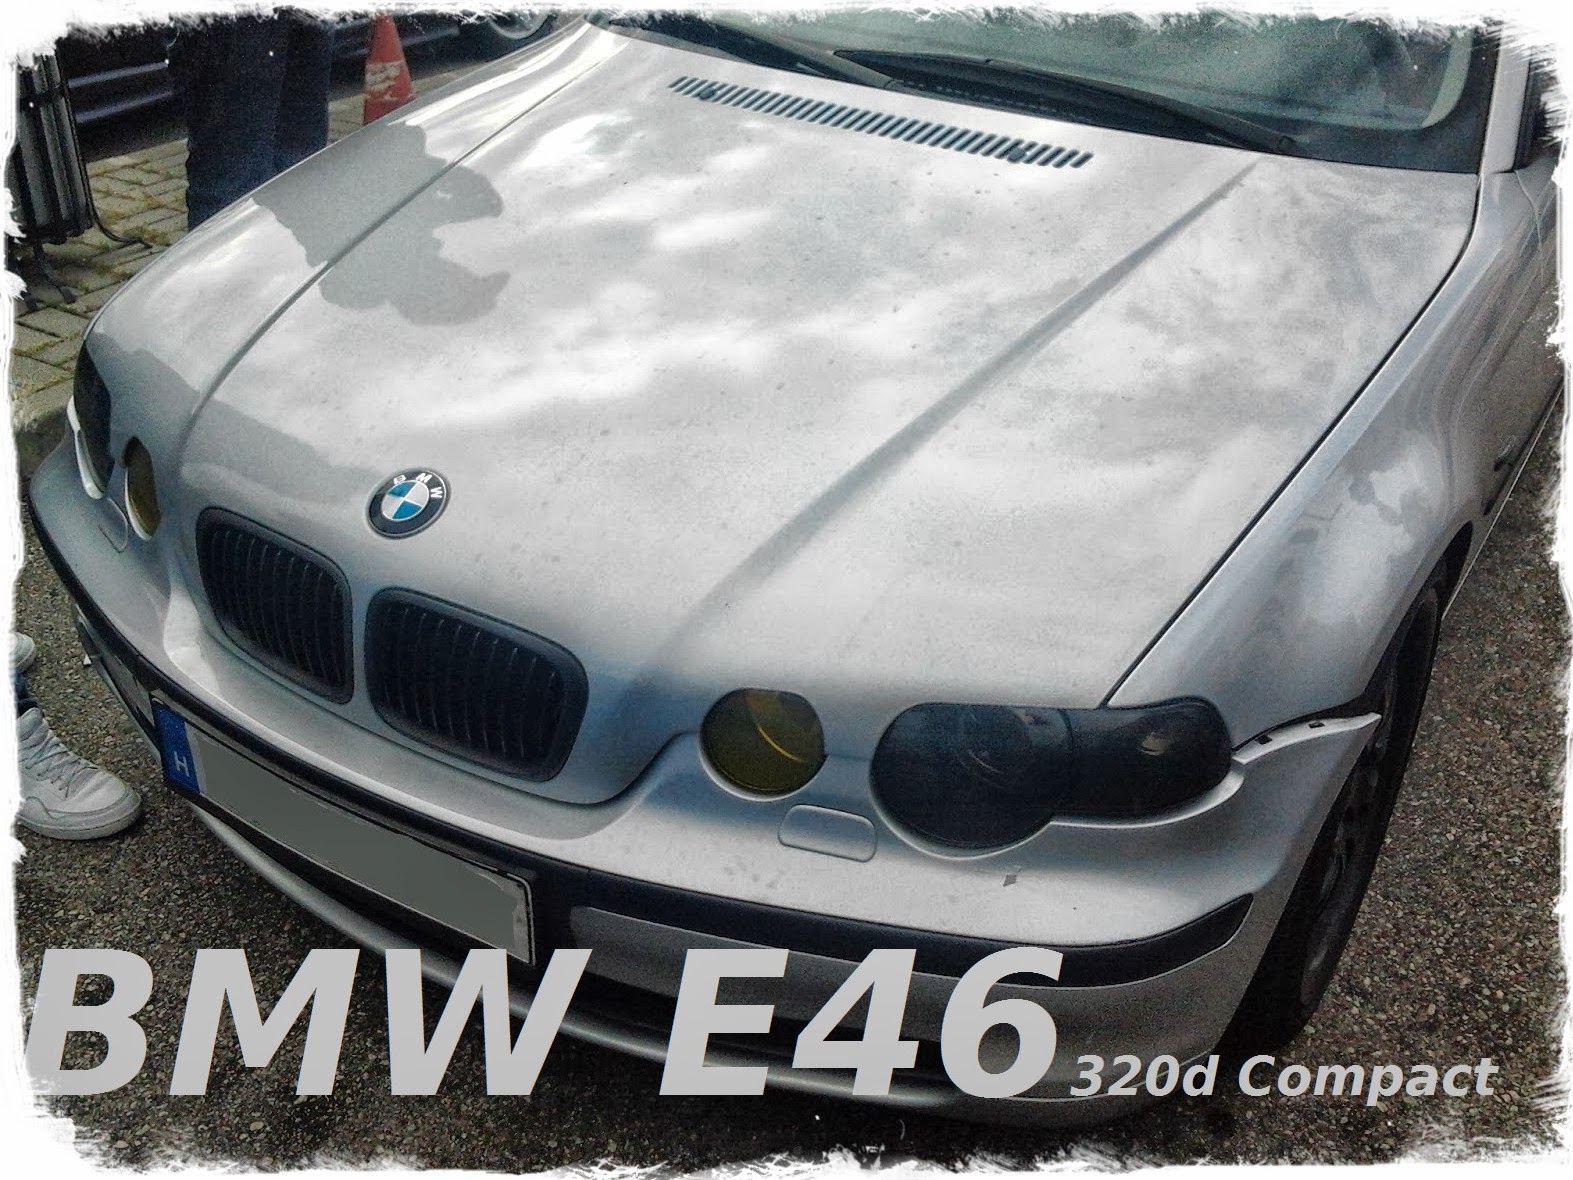 Gyors-szemle: BMW E46 320d Compact